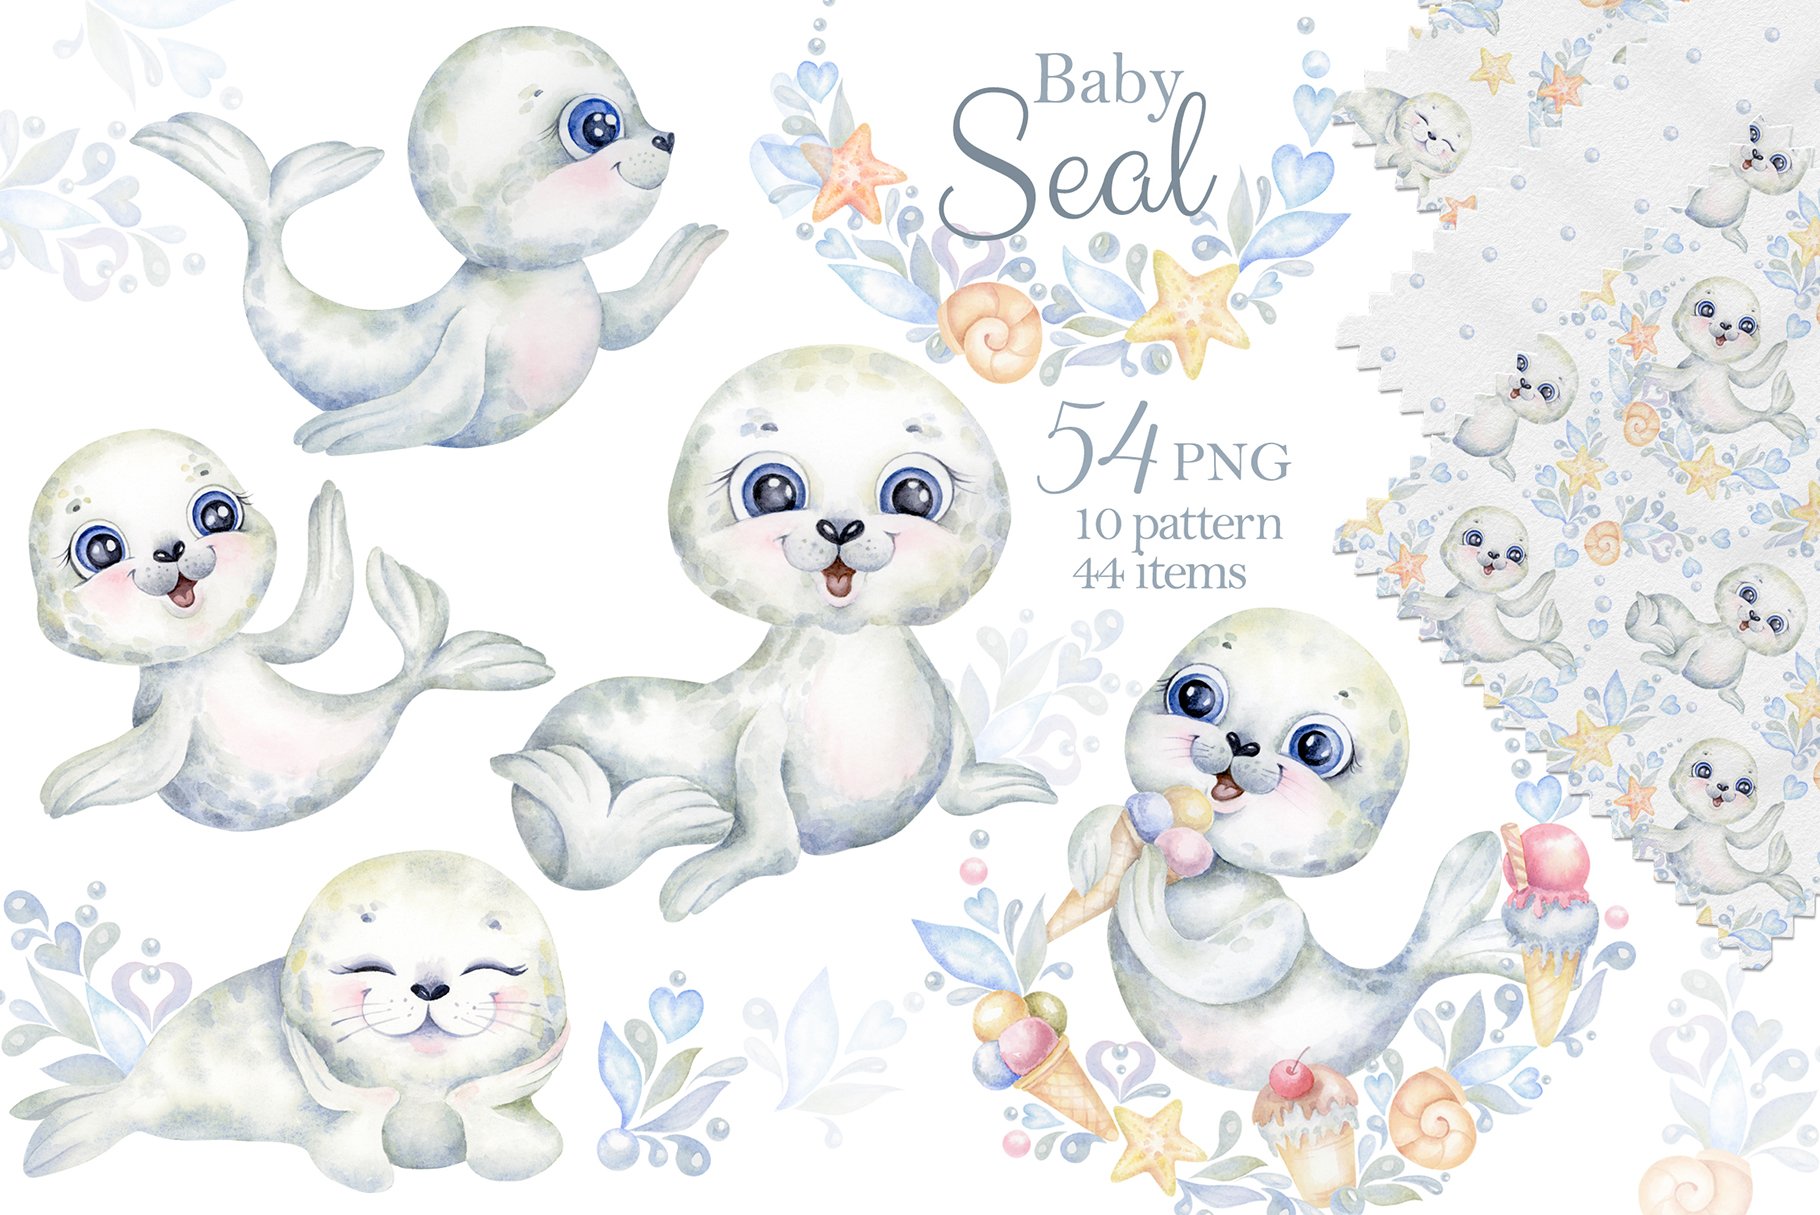 So cute seal babies.